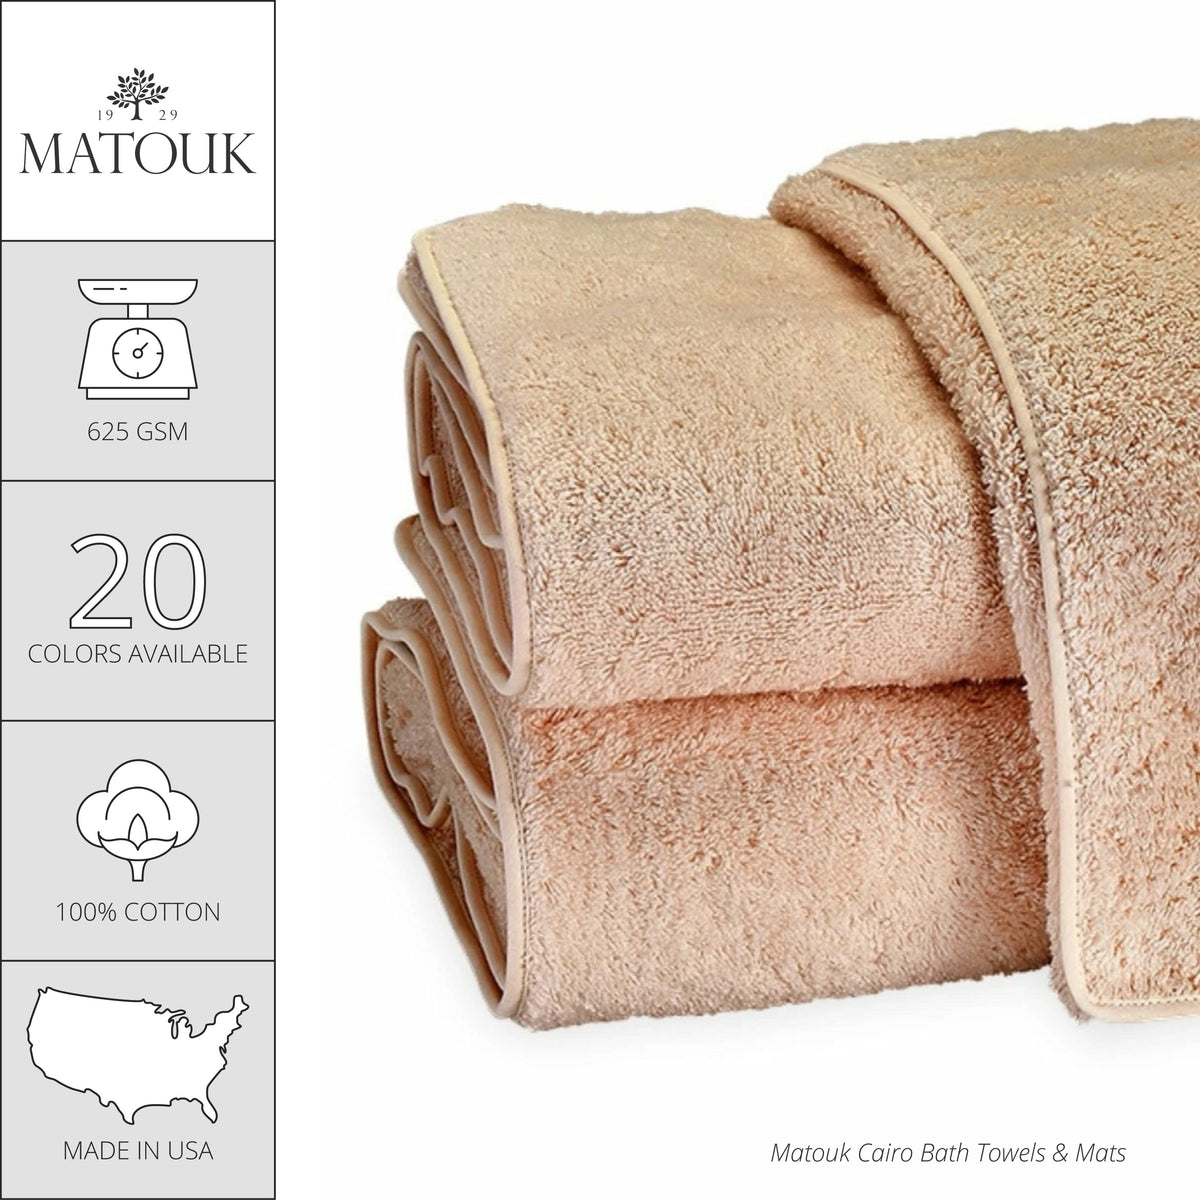 Matouk Cairo Scallop Bath Towels and Mats - Sand/White